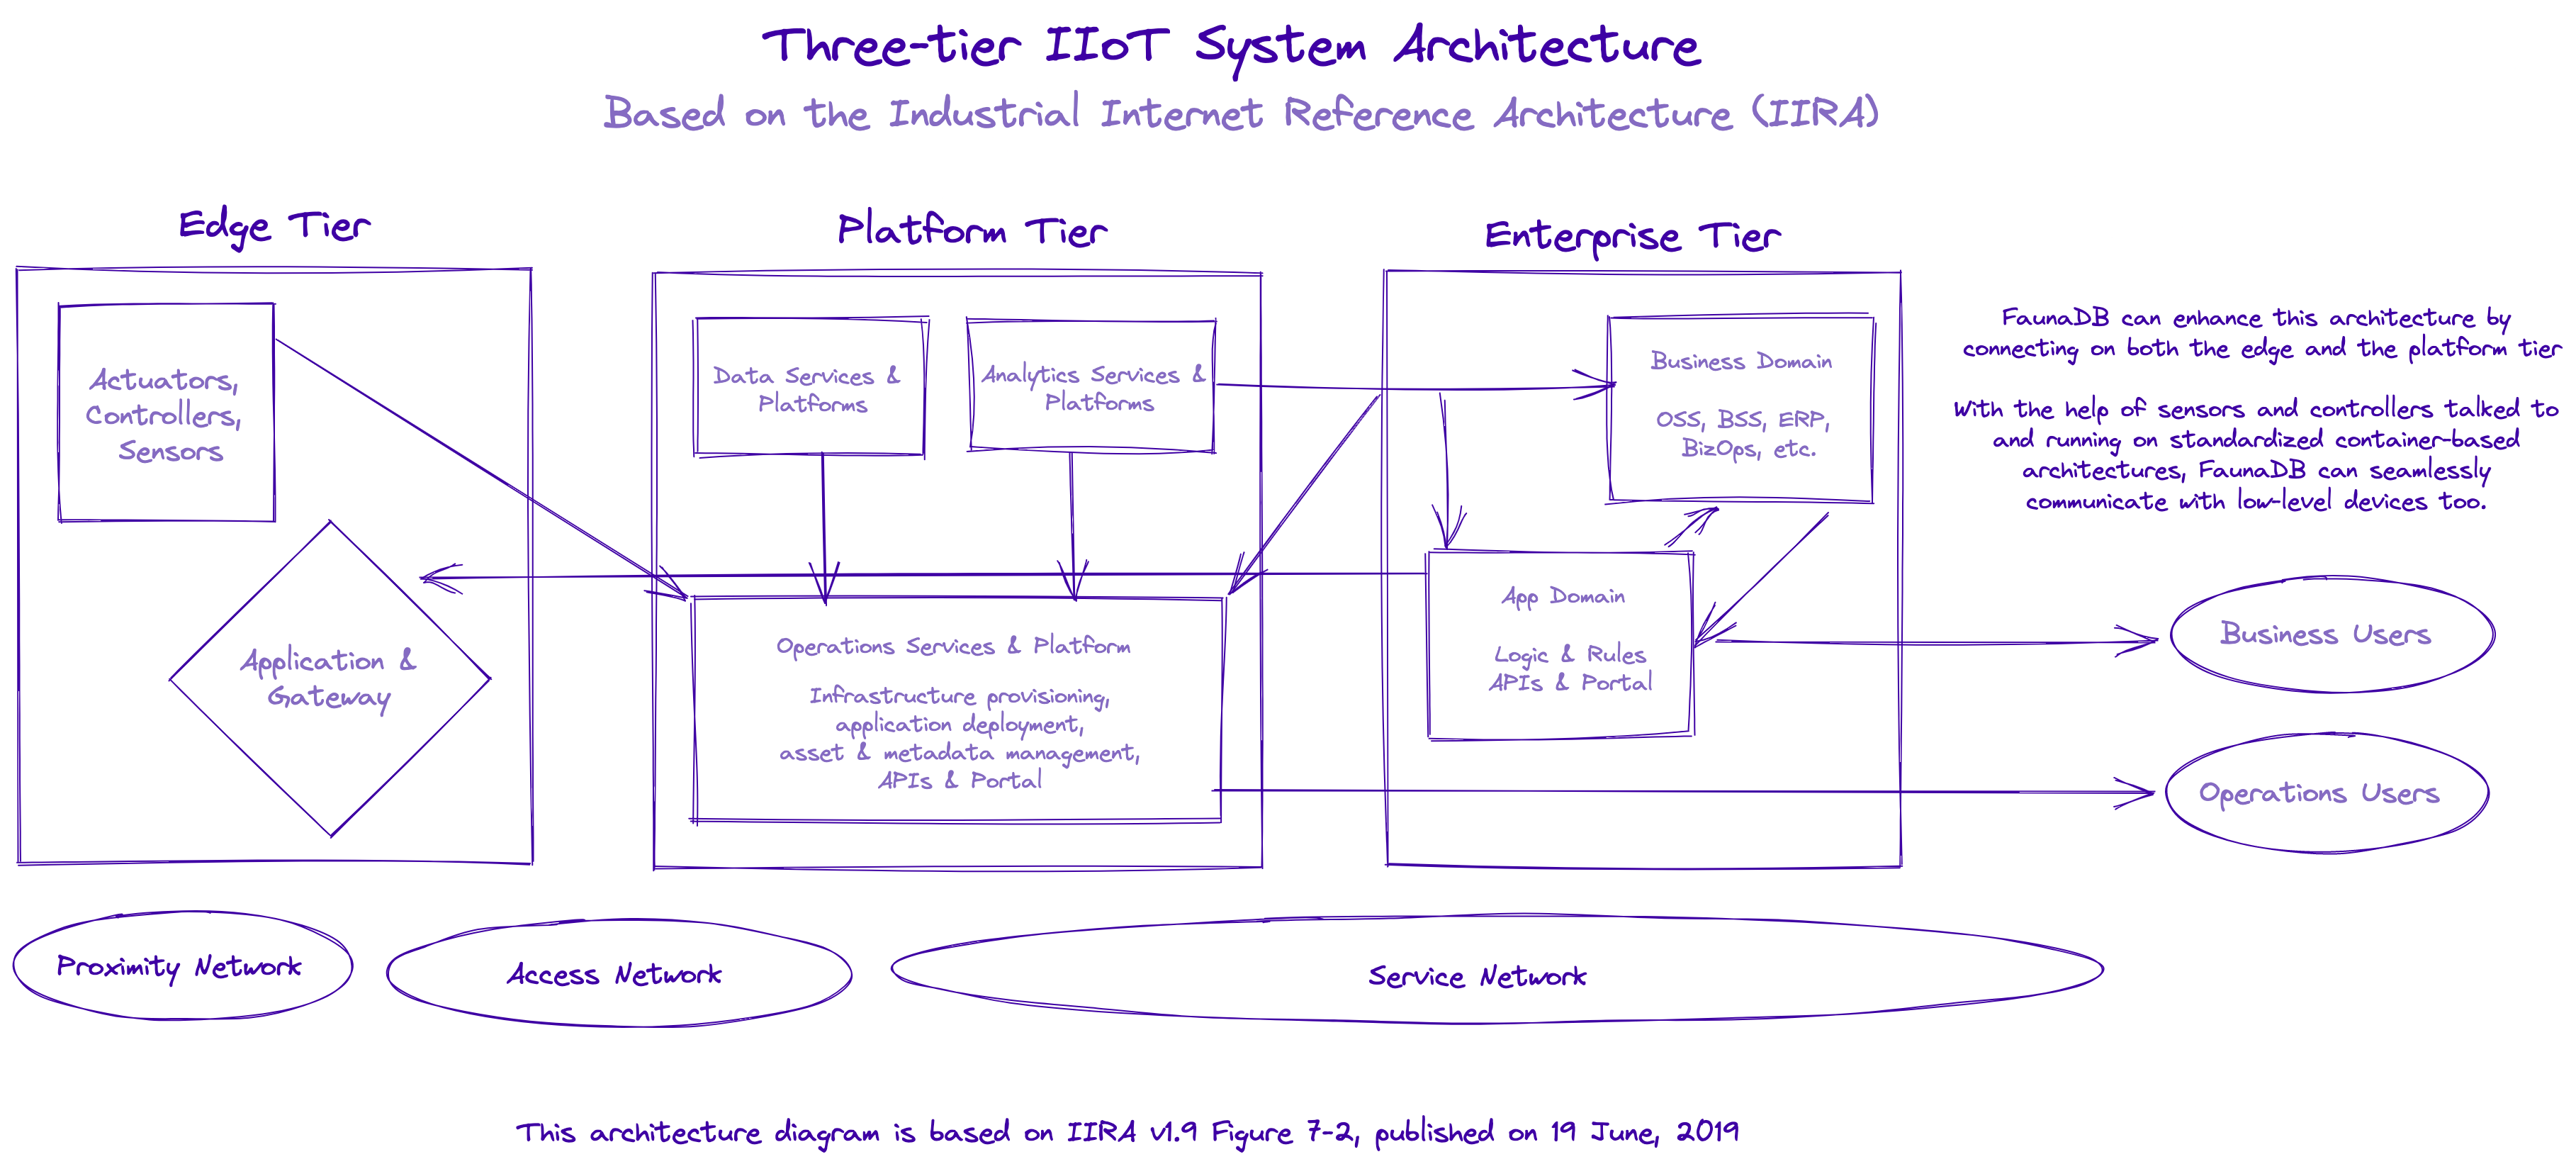 Three-tier IIoT system architecture